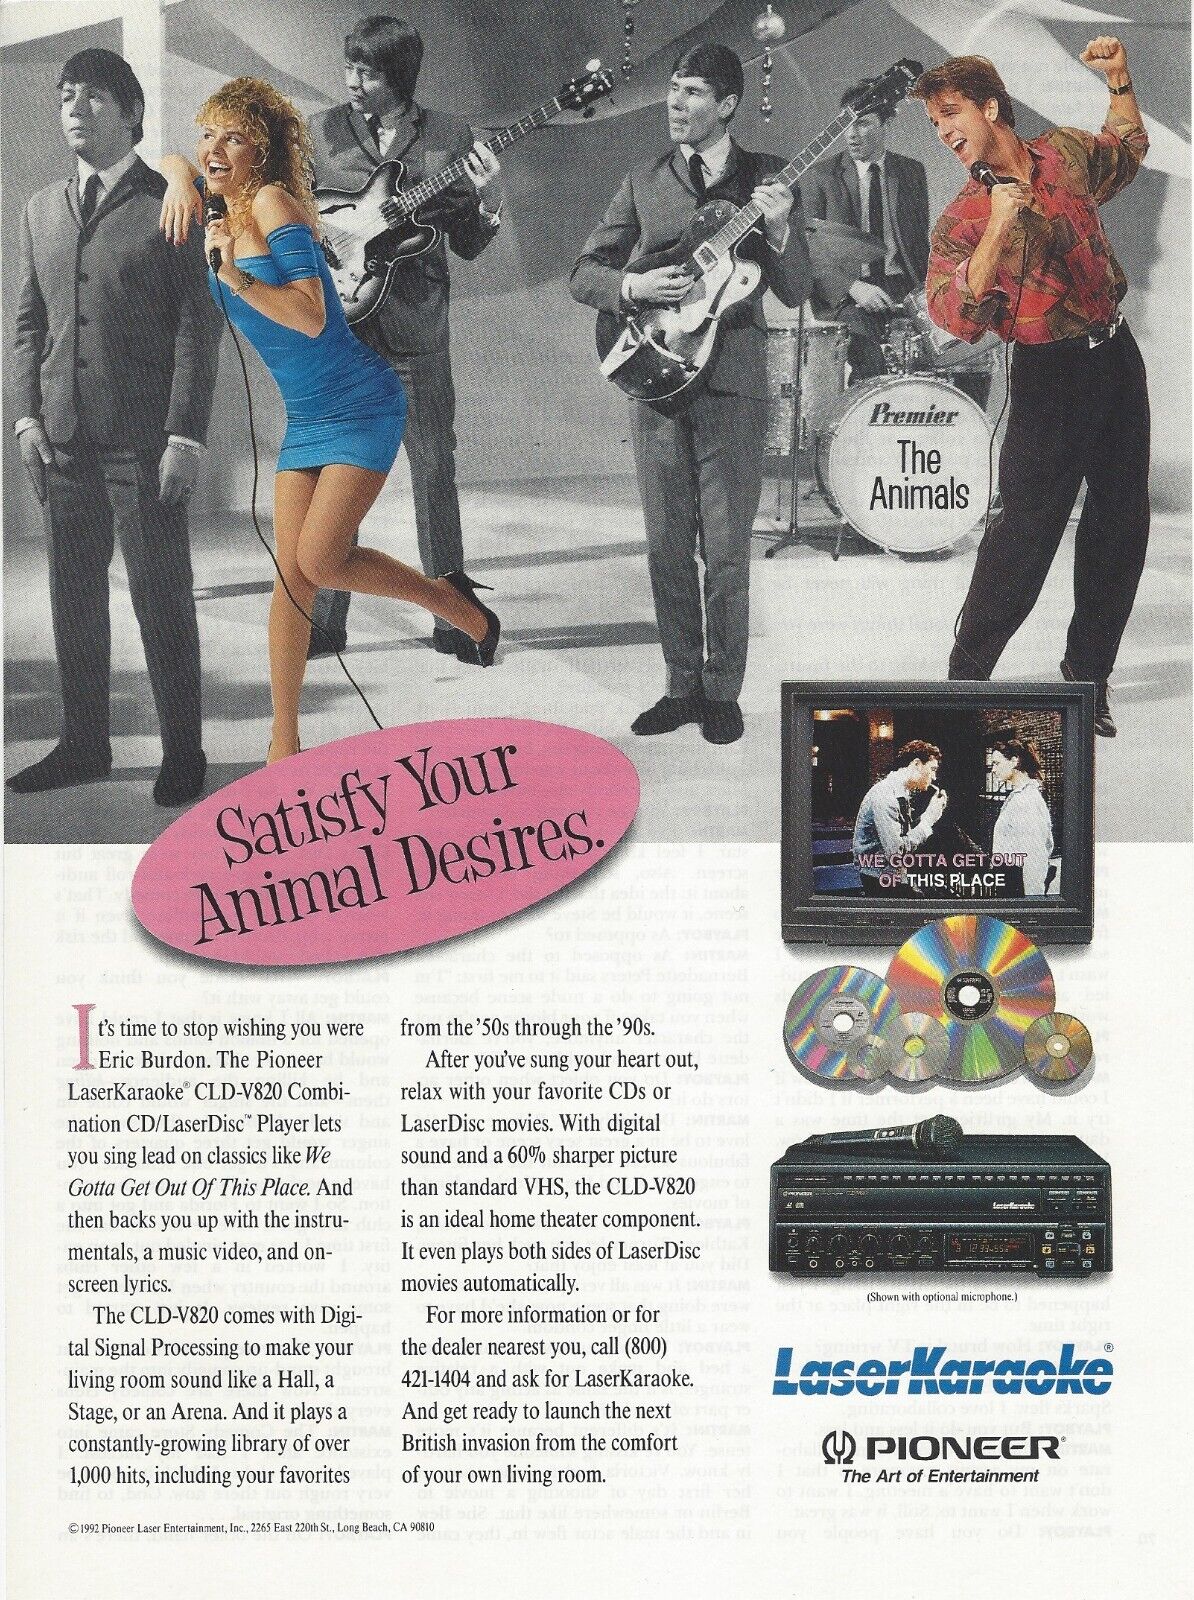 1993 Pioneer LaserKaraoke LaserDisc The Animals vintage print ad advertisement